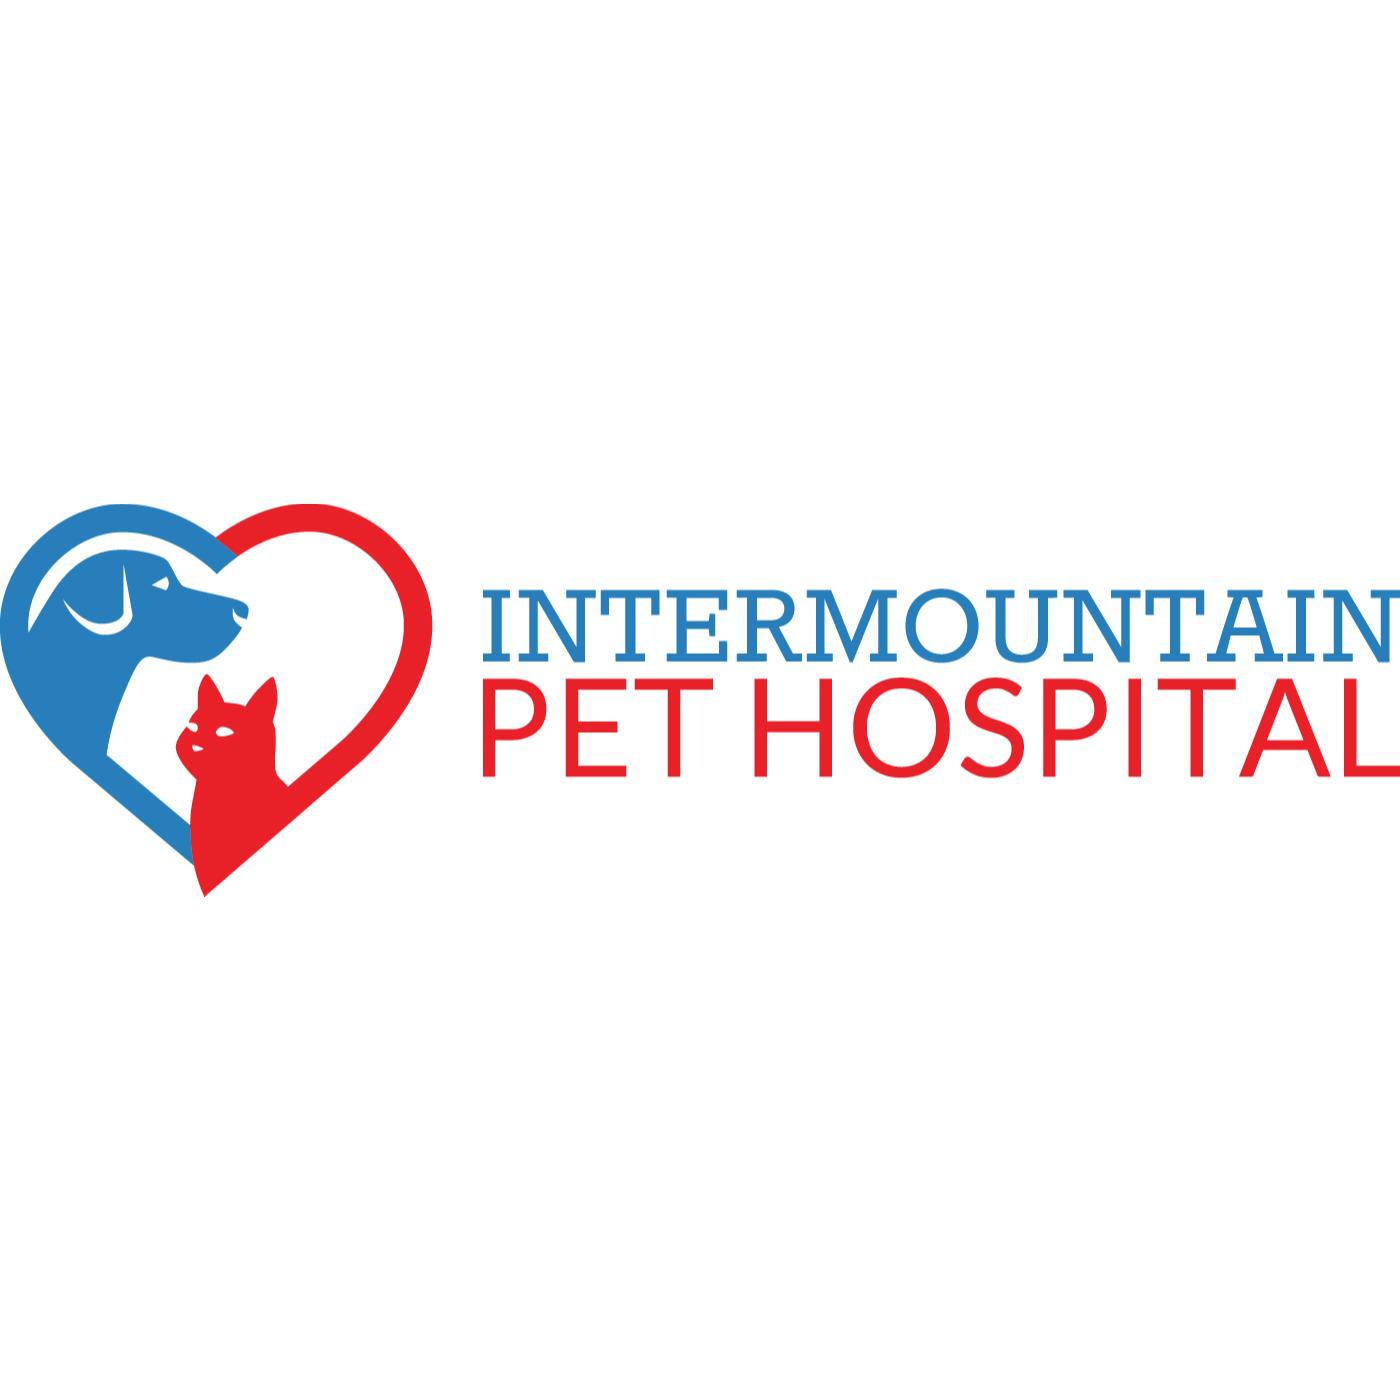 Intermountain Pet Hospital - Nampa